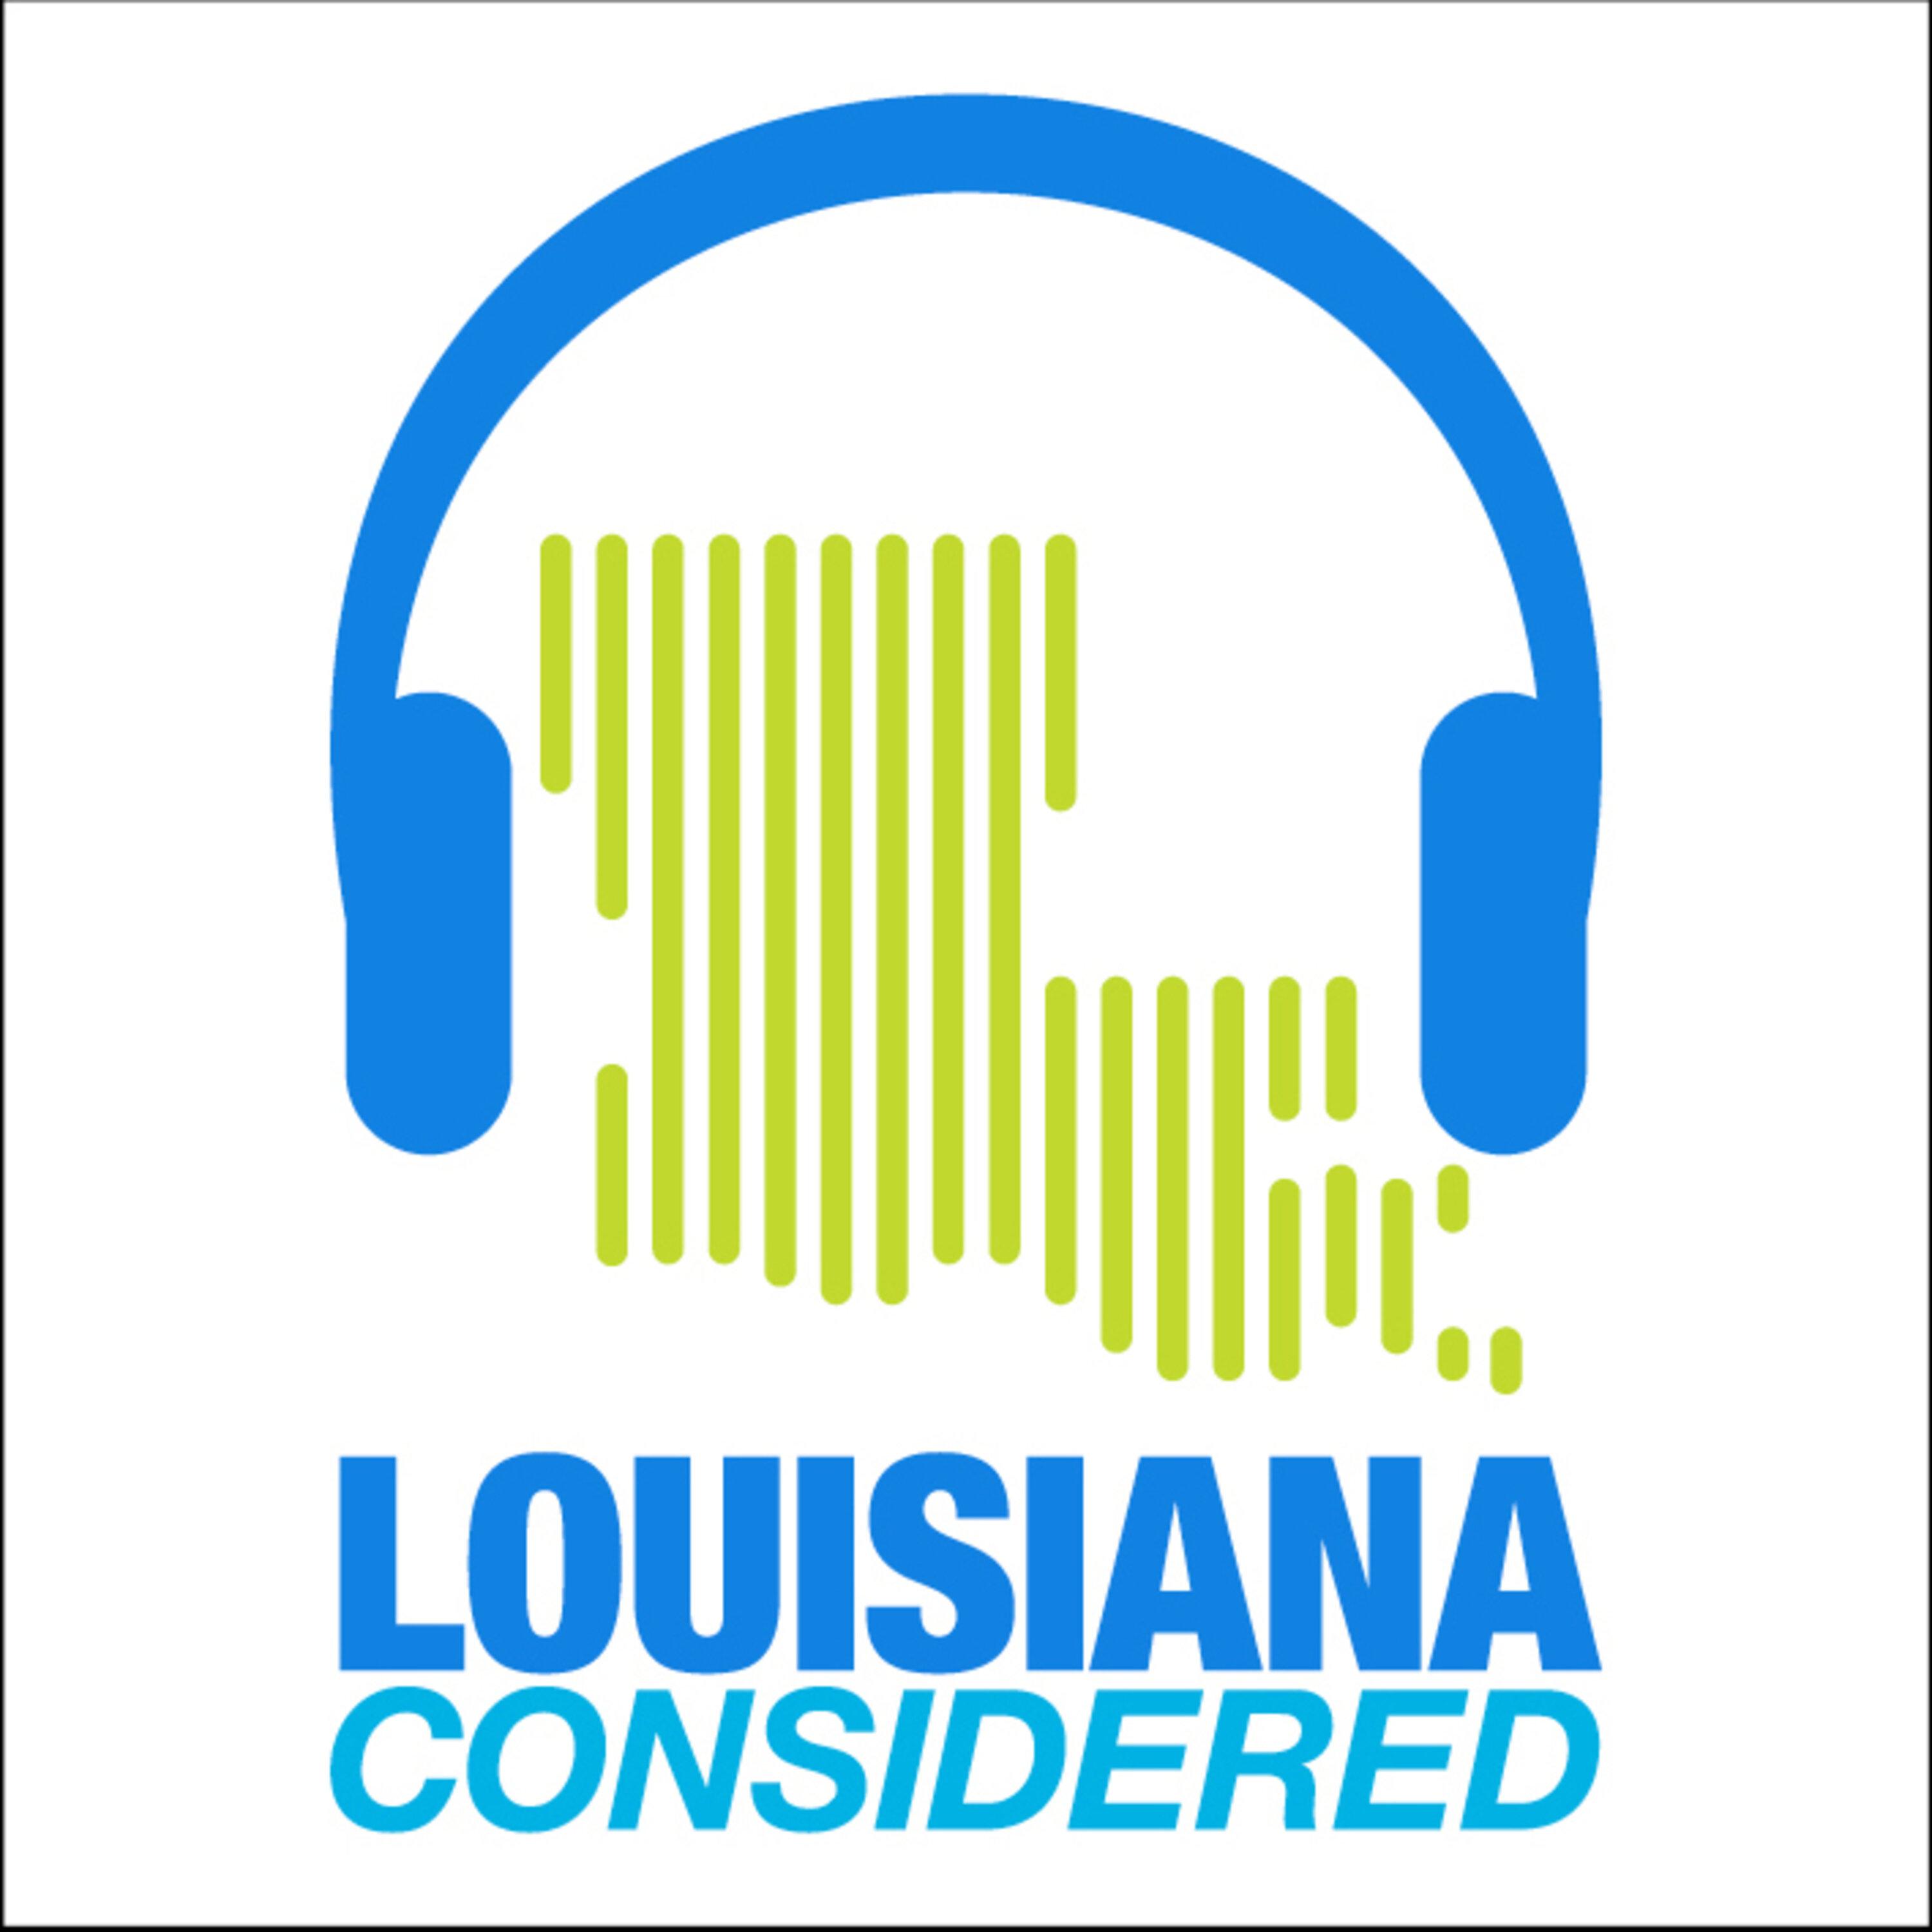 Thumbnail for "Louisiana Considered: Desire, Louisiana".